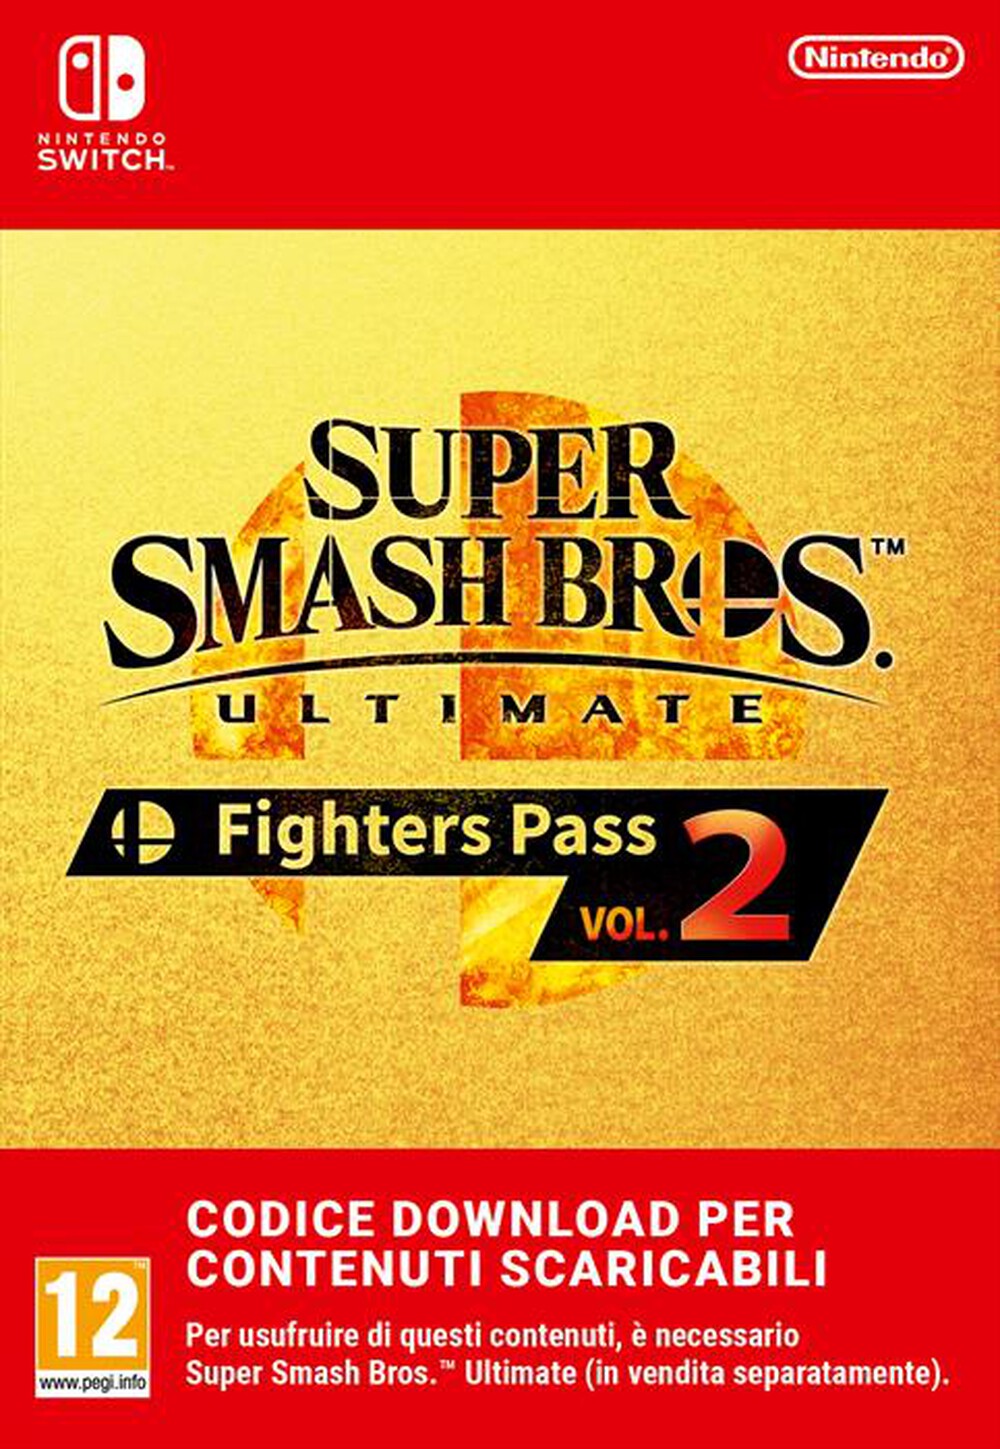 "NINTENDO - Super Smash Bros. Ultimate: Fighters Pass Vol. 2"